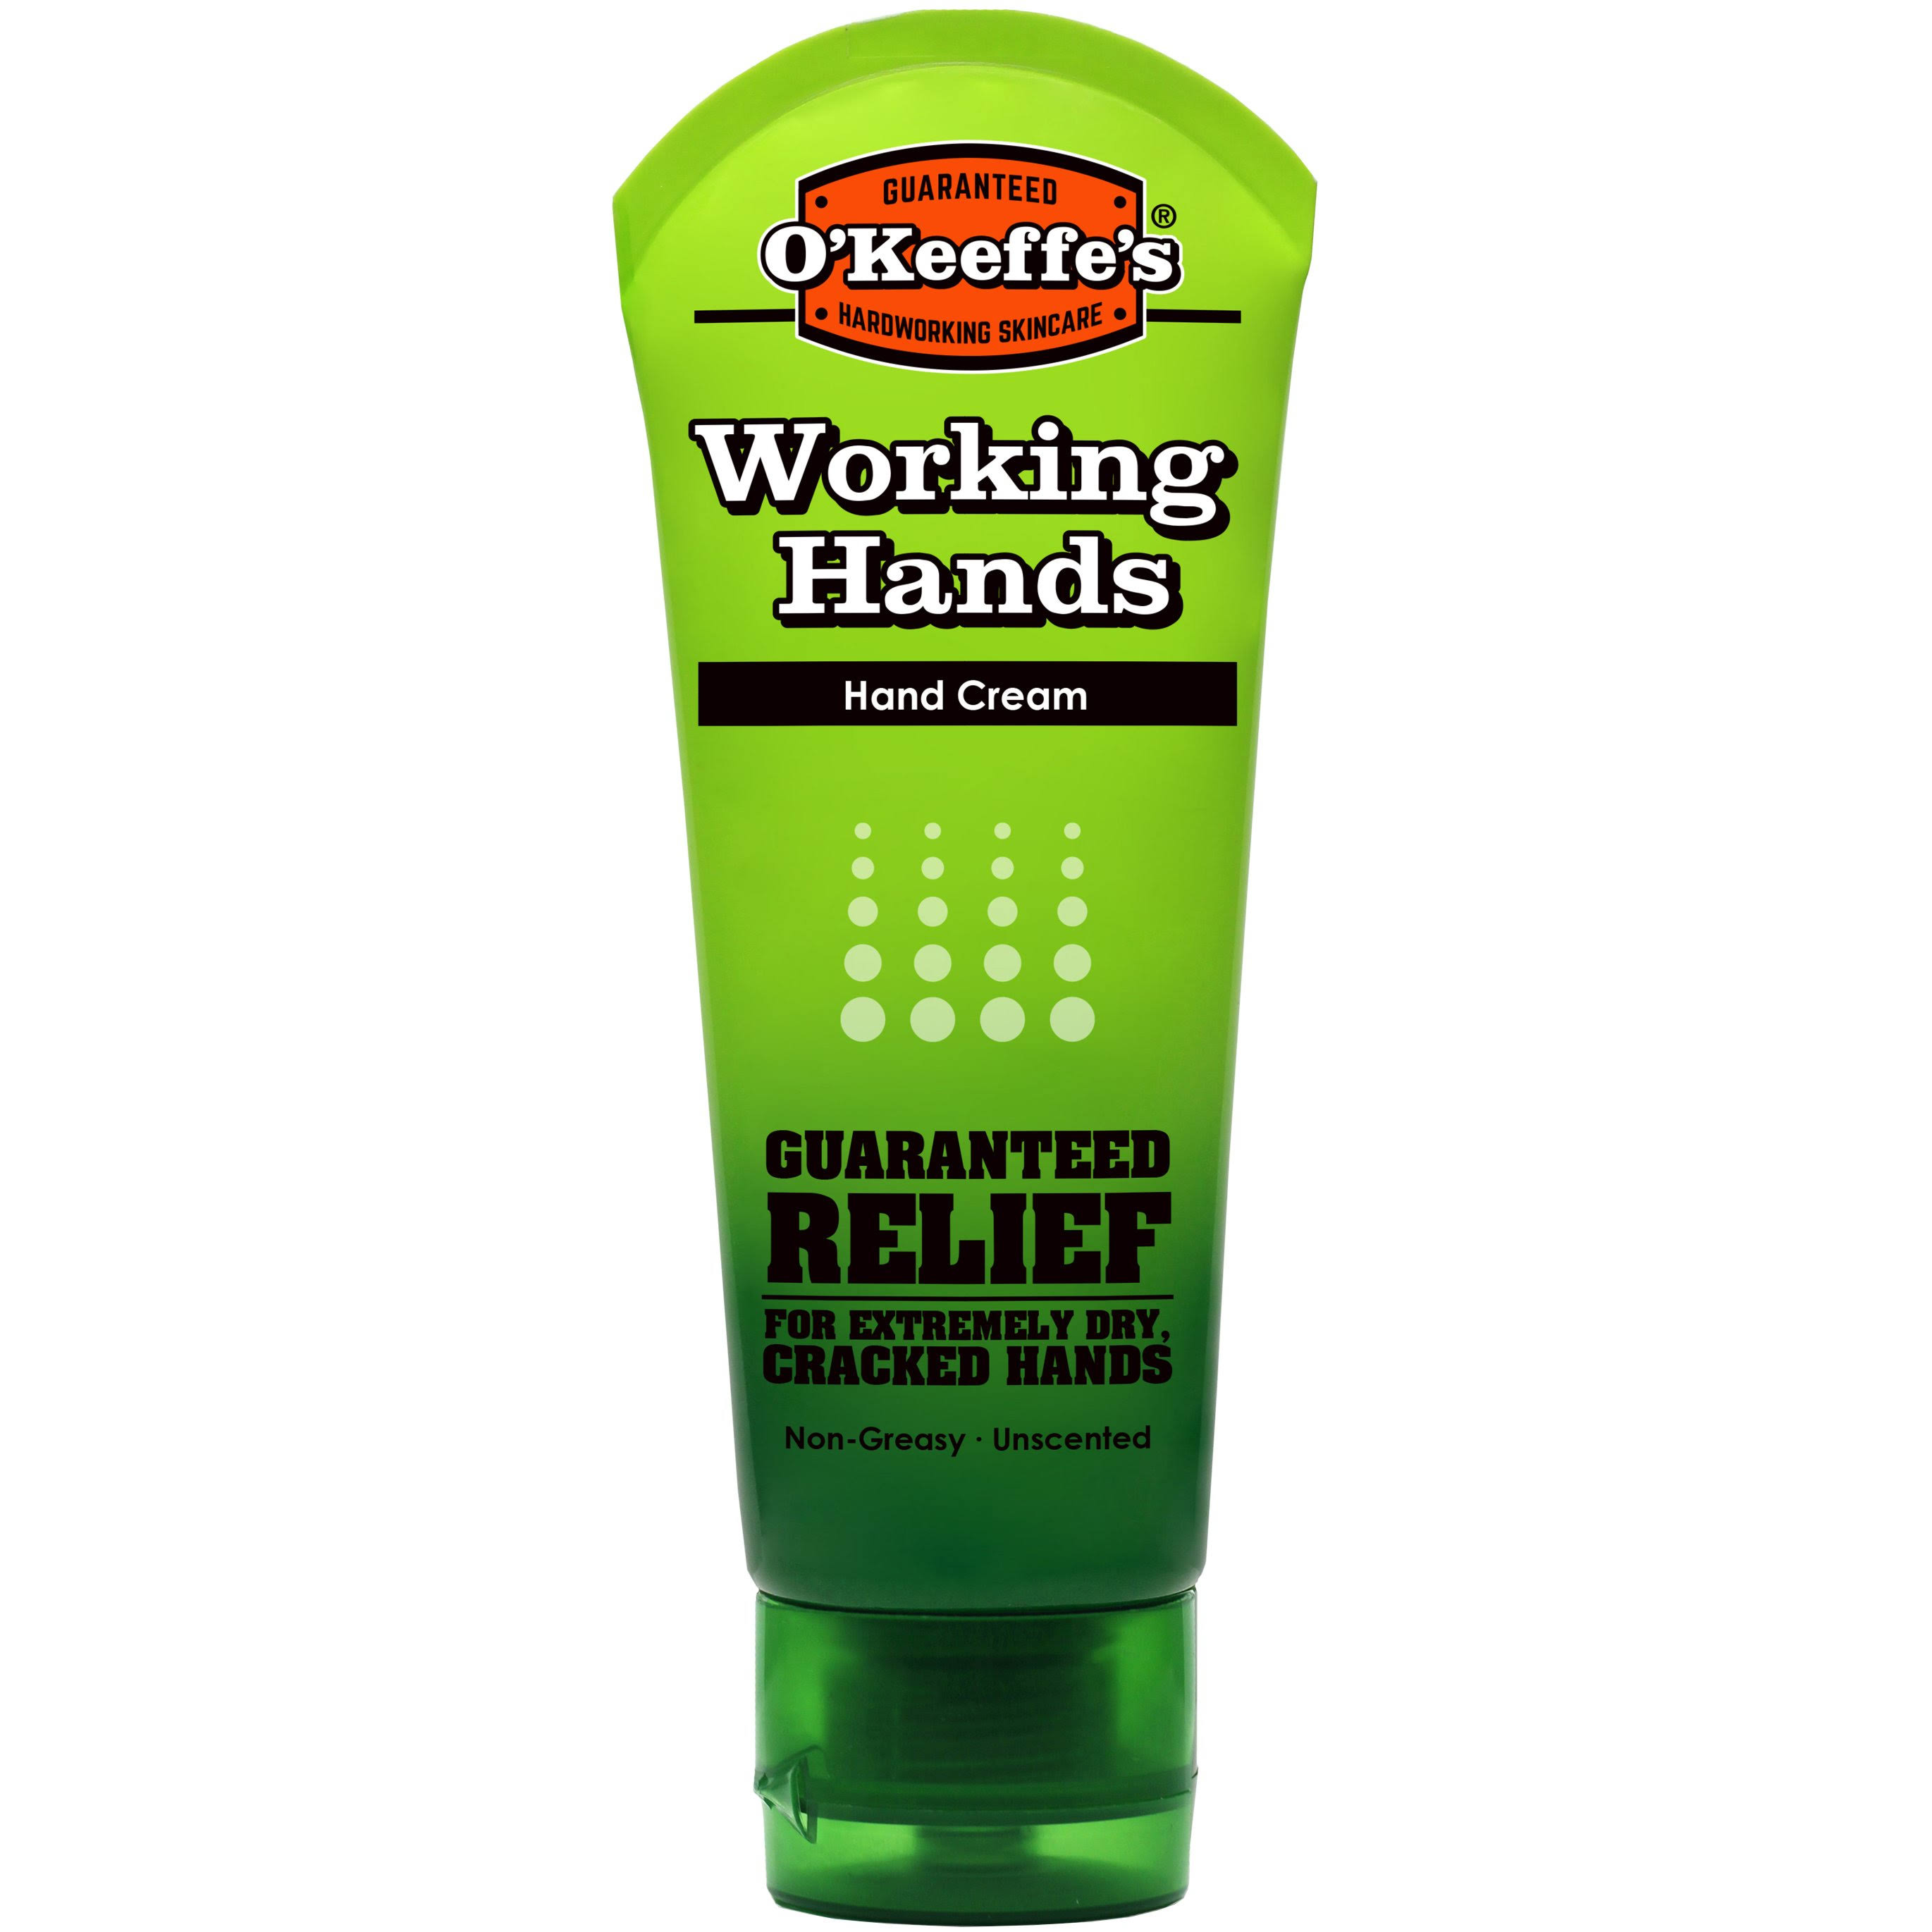 O'Keeffe's Working Hands Hand Cream - 3.0 oz